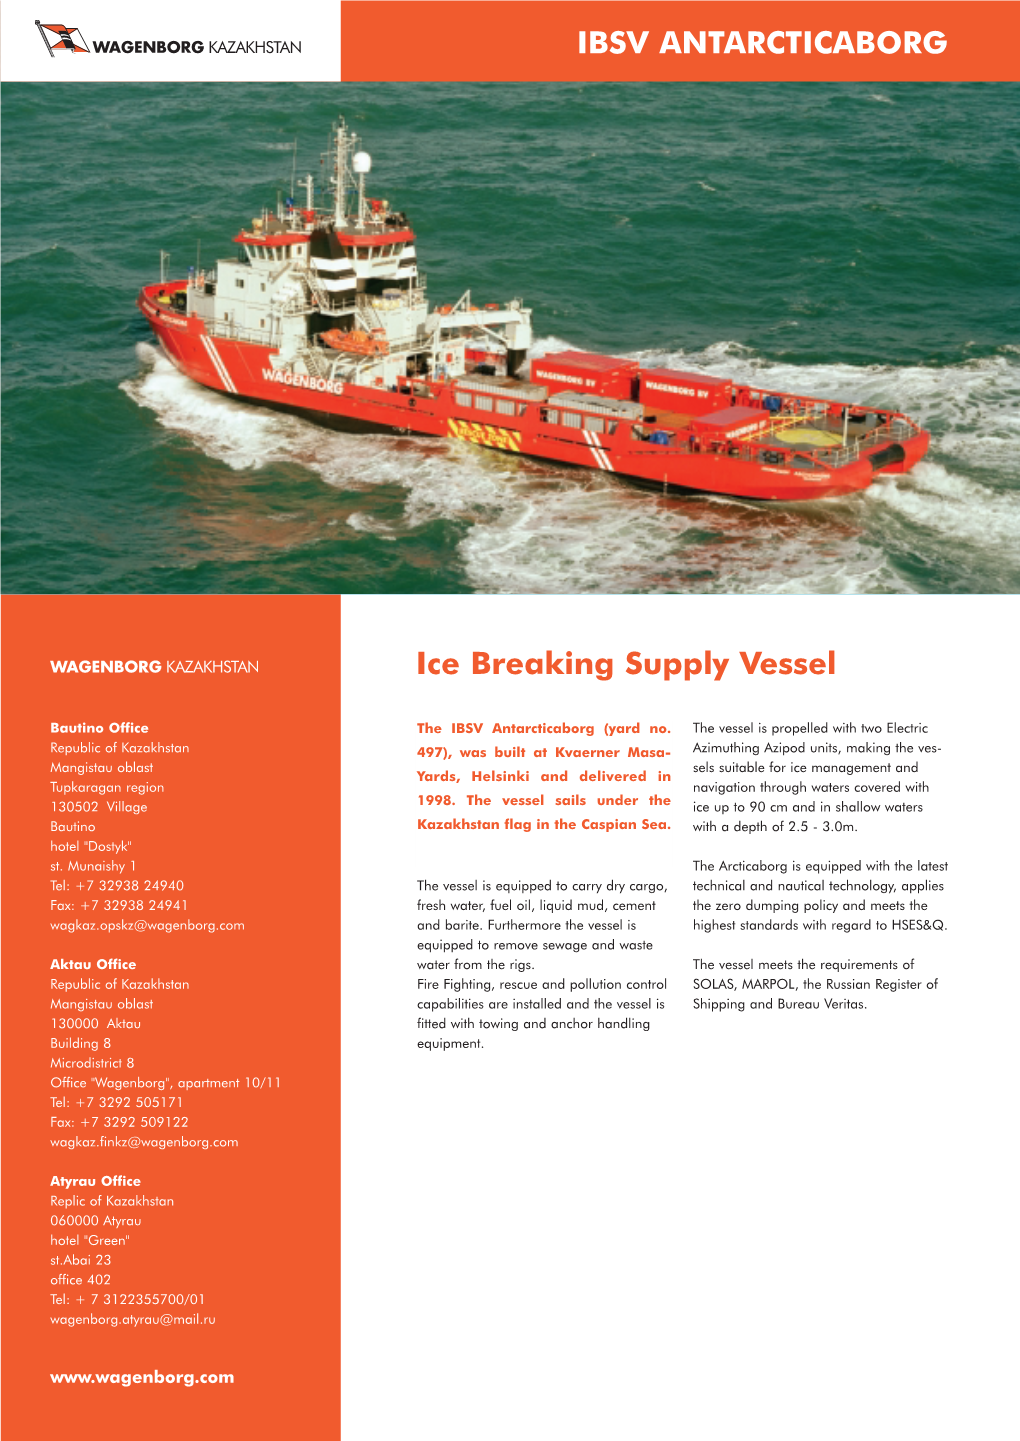 Ice Breaking Supply Vessel IBSV ANTARCTICABORG